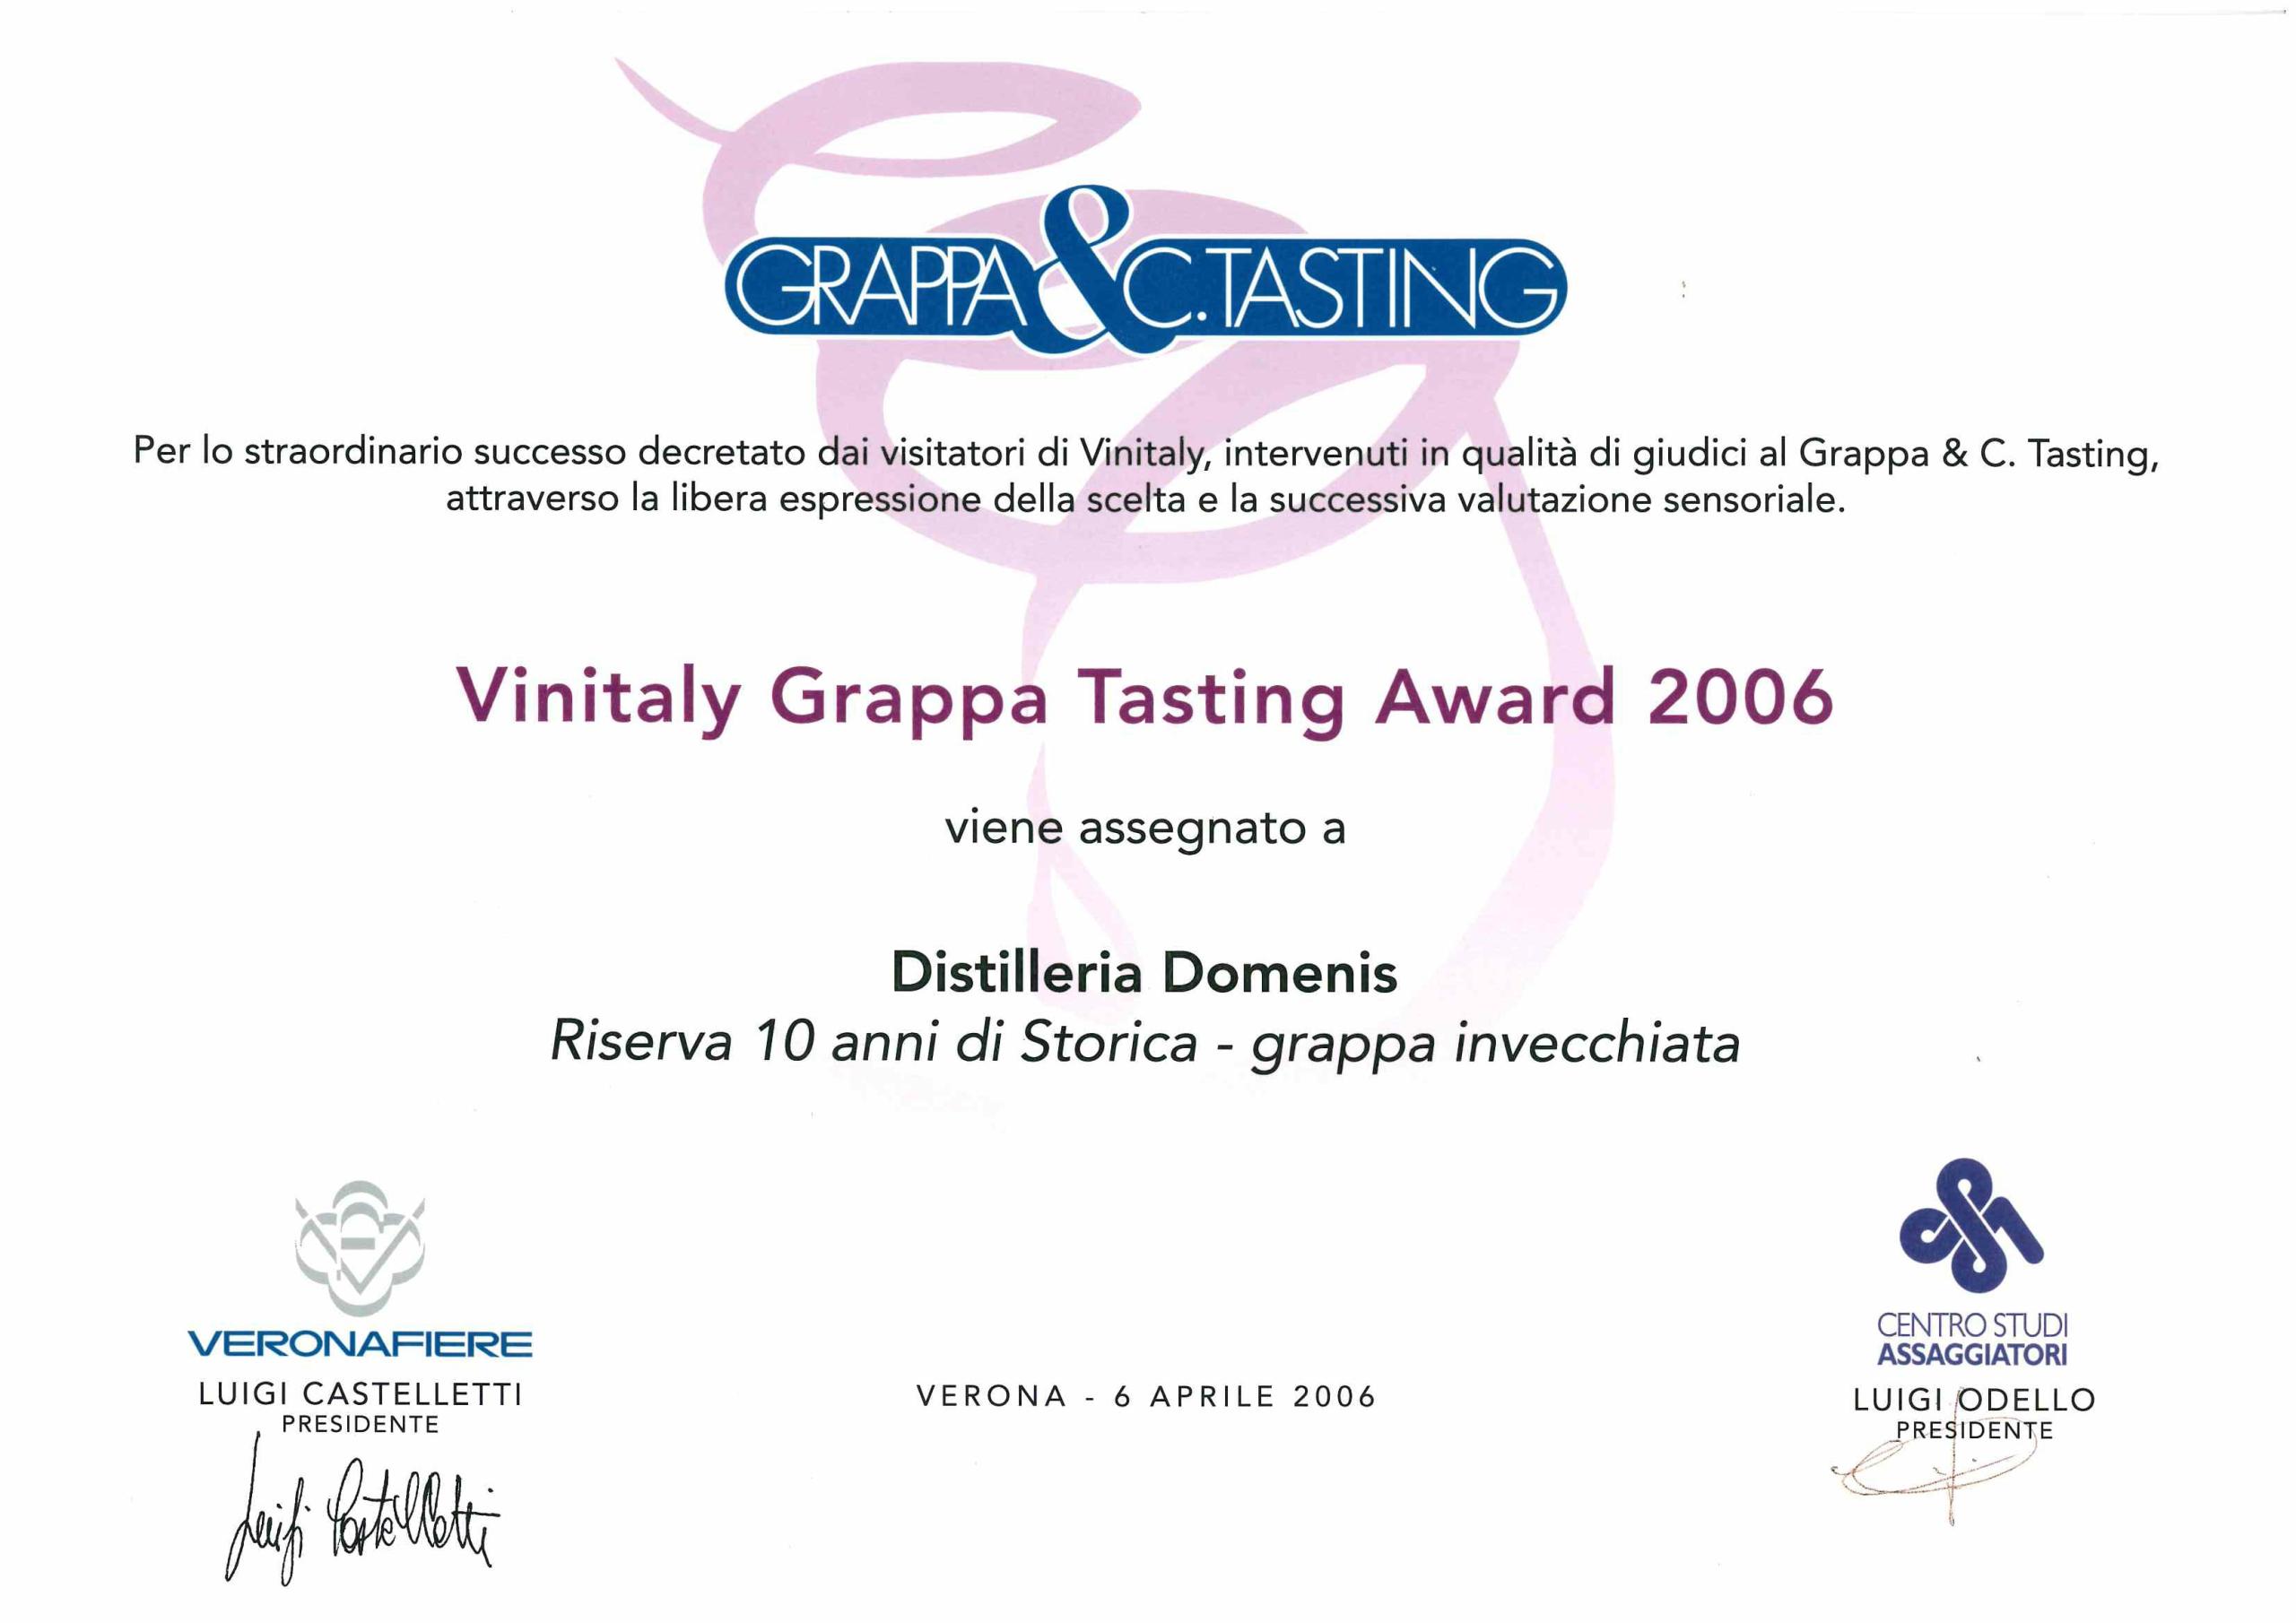 Vinitaly Grappa Tasting Award 2006 – Storica Riserva 10 anni